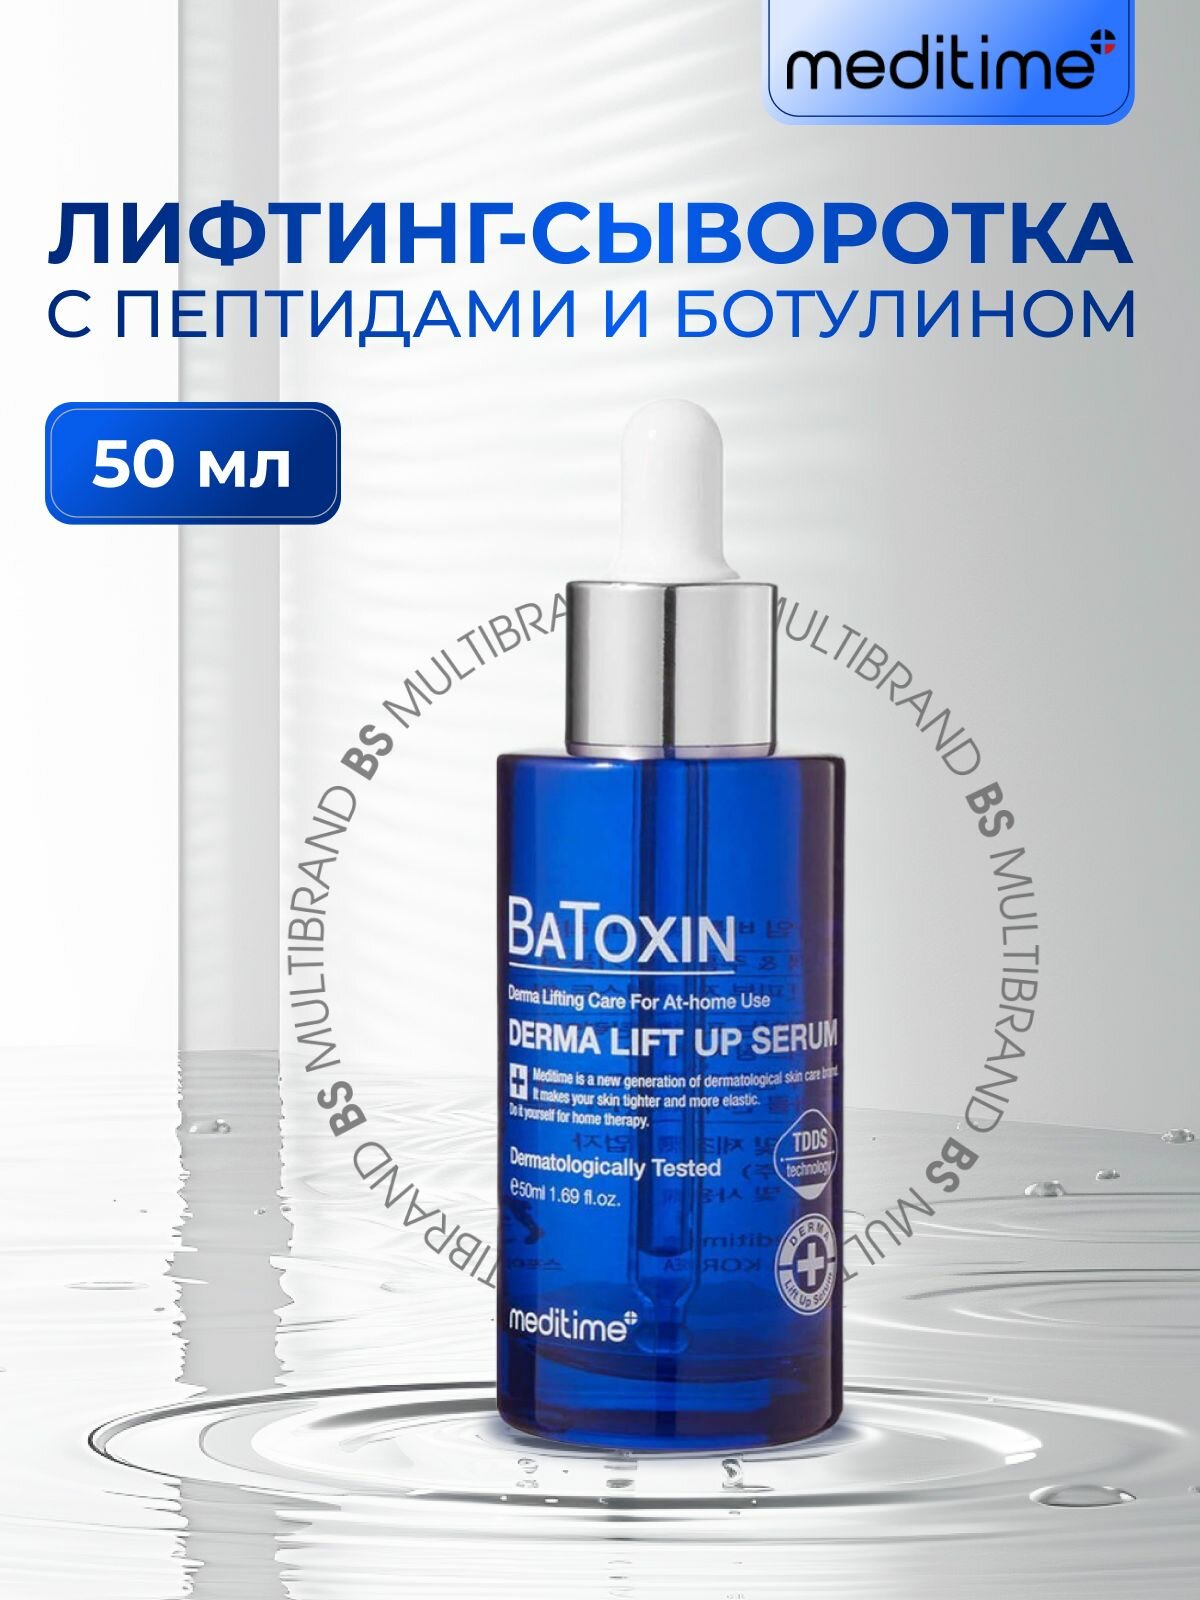 Meditime Лифтинг-сыворотка с пептидами и ботулином Meditime Batoxin Derma Lift Up Serum, 50 мл